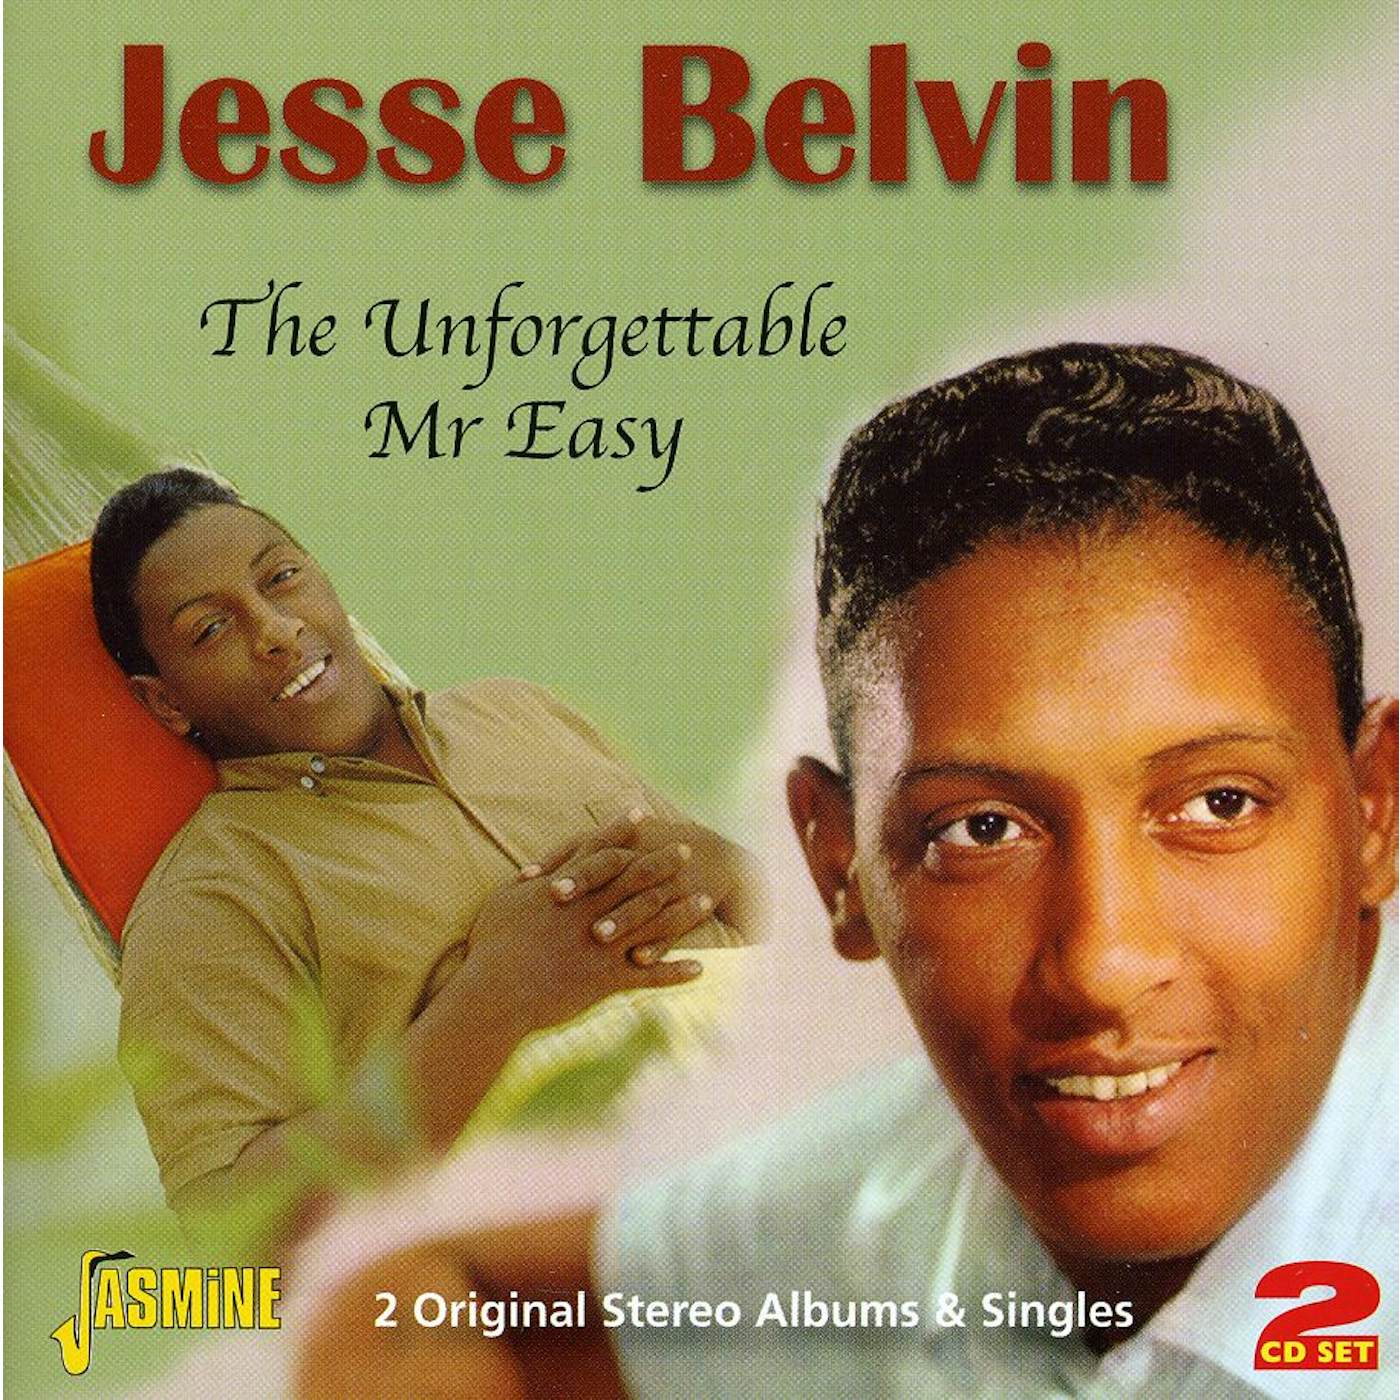 Jesse Belvin UNFORGETTABLE MR EASY CD